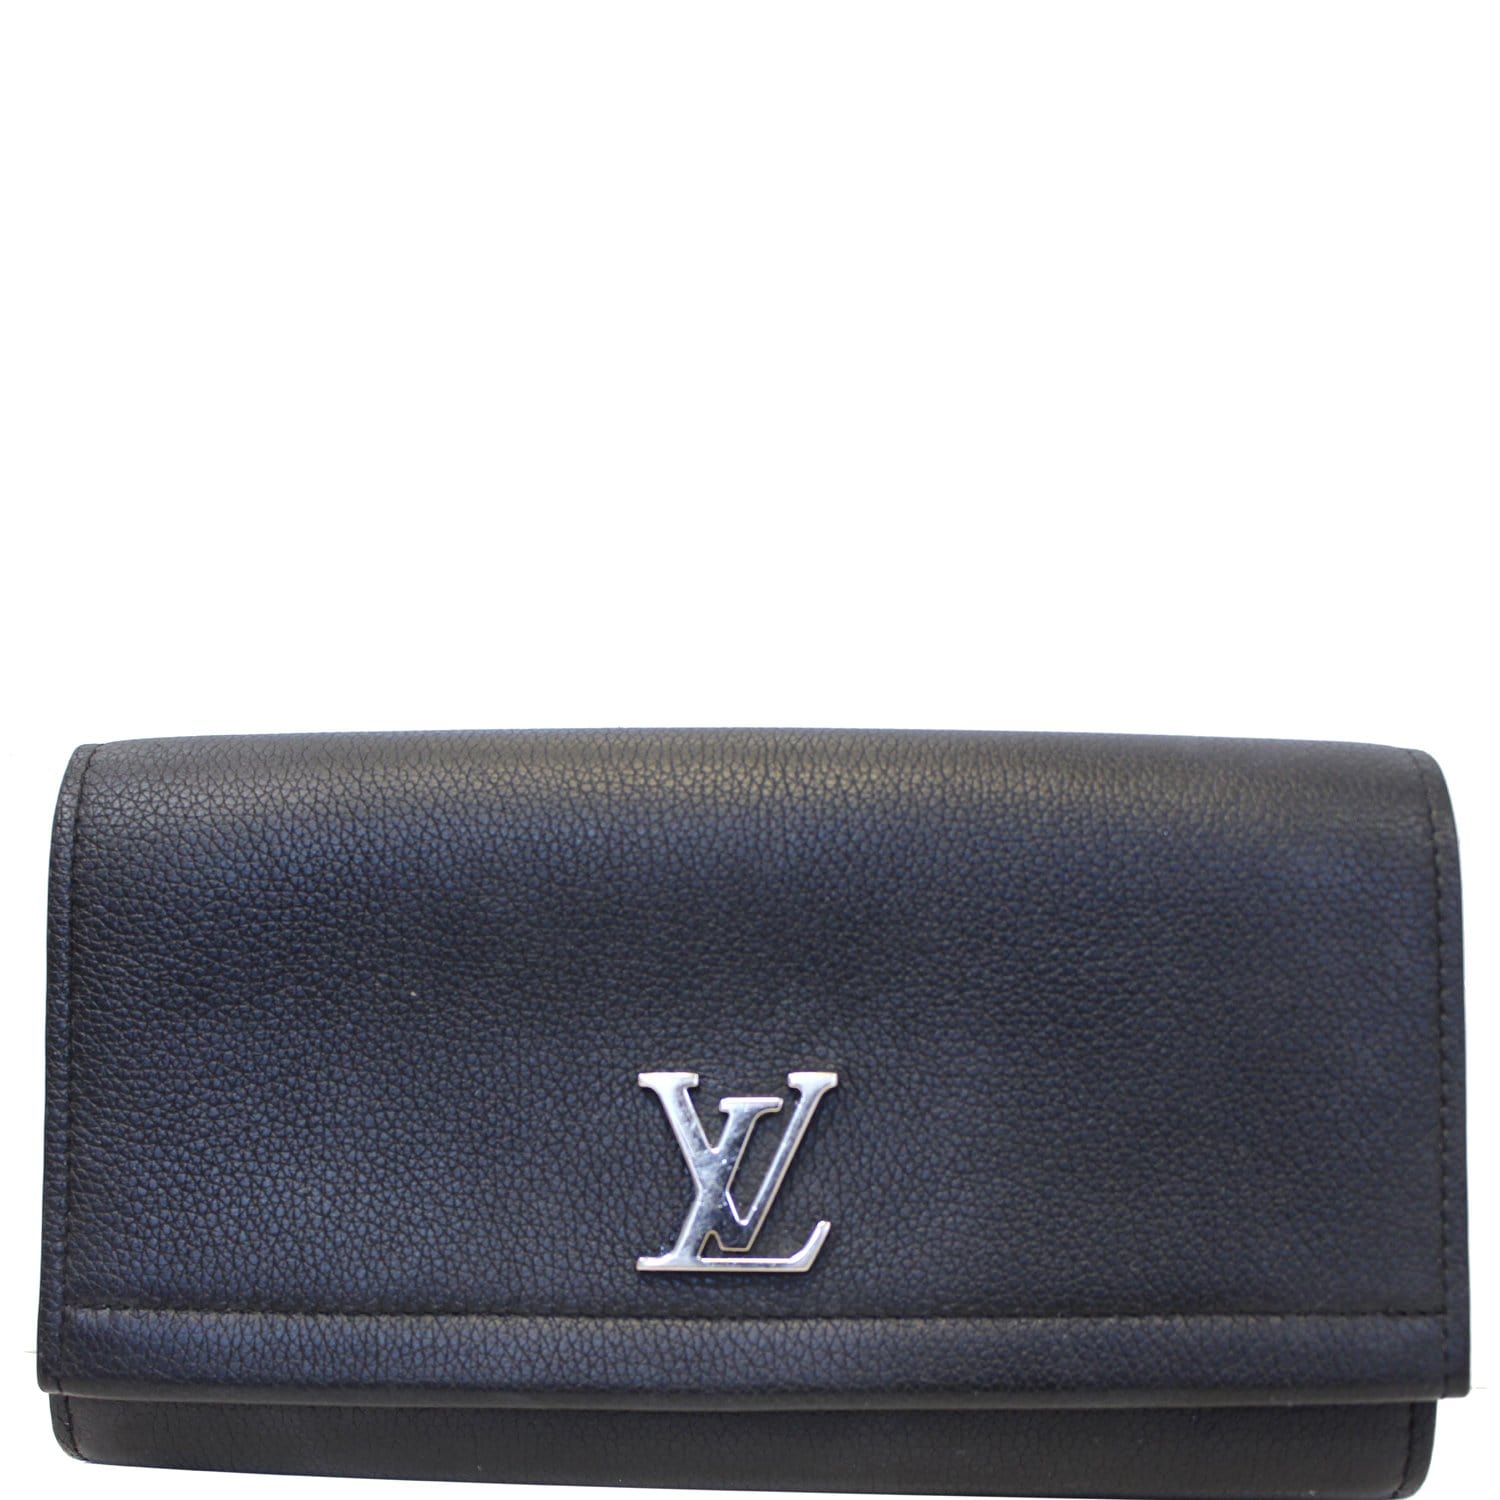 Shop Louis Vuitton LOCKME 2021-22FW Lockme pouch (M80898) by SkyNS